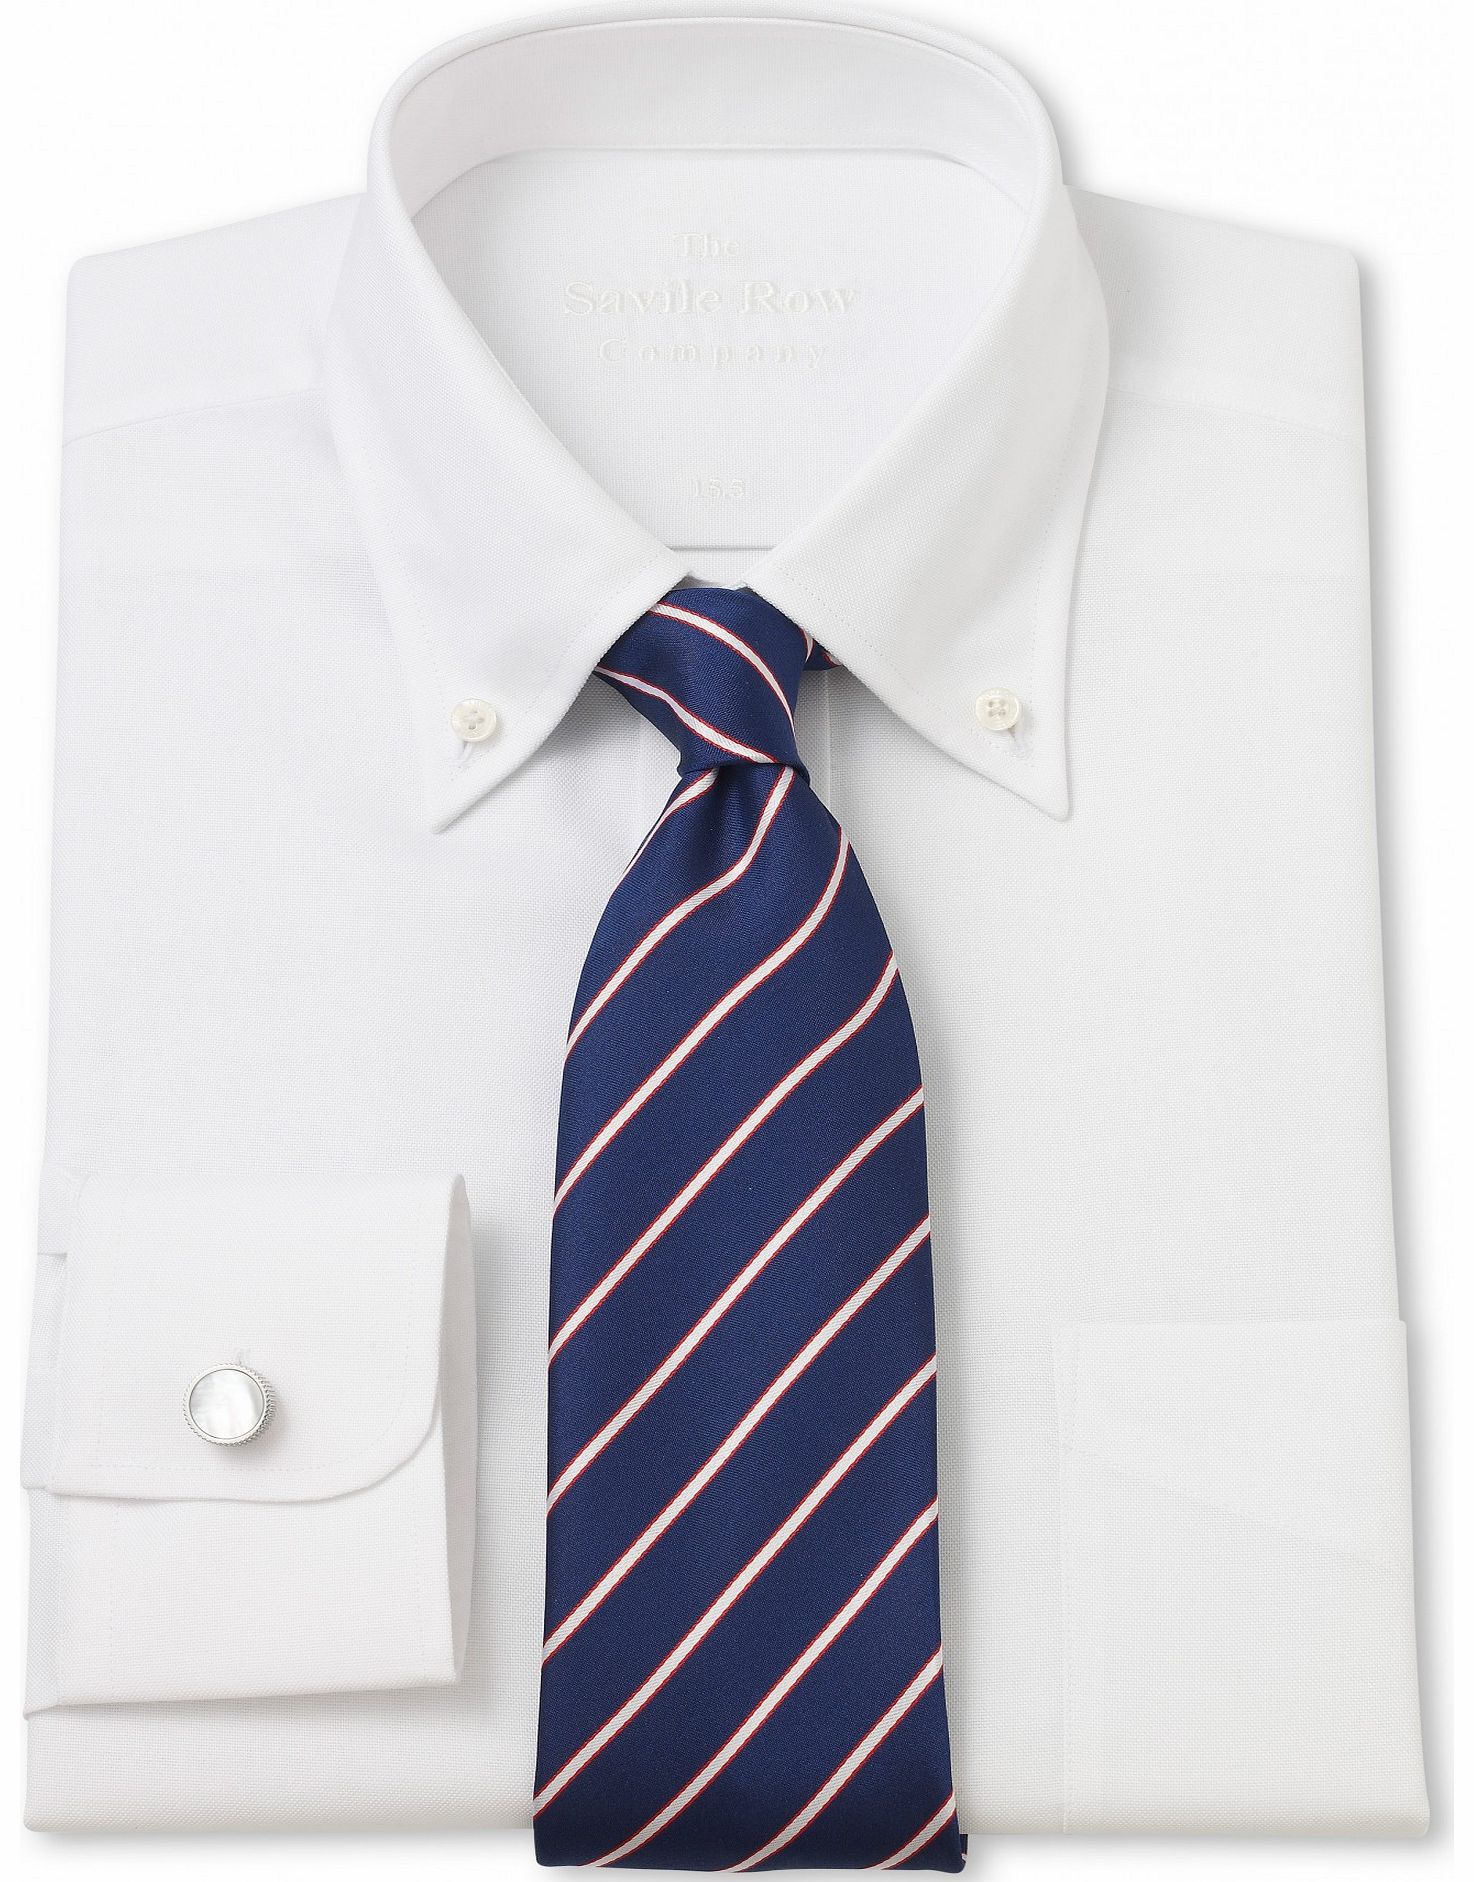 Savile Row Company White Oxford Button Down Classic Shirt 20``